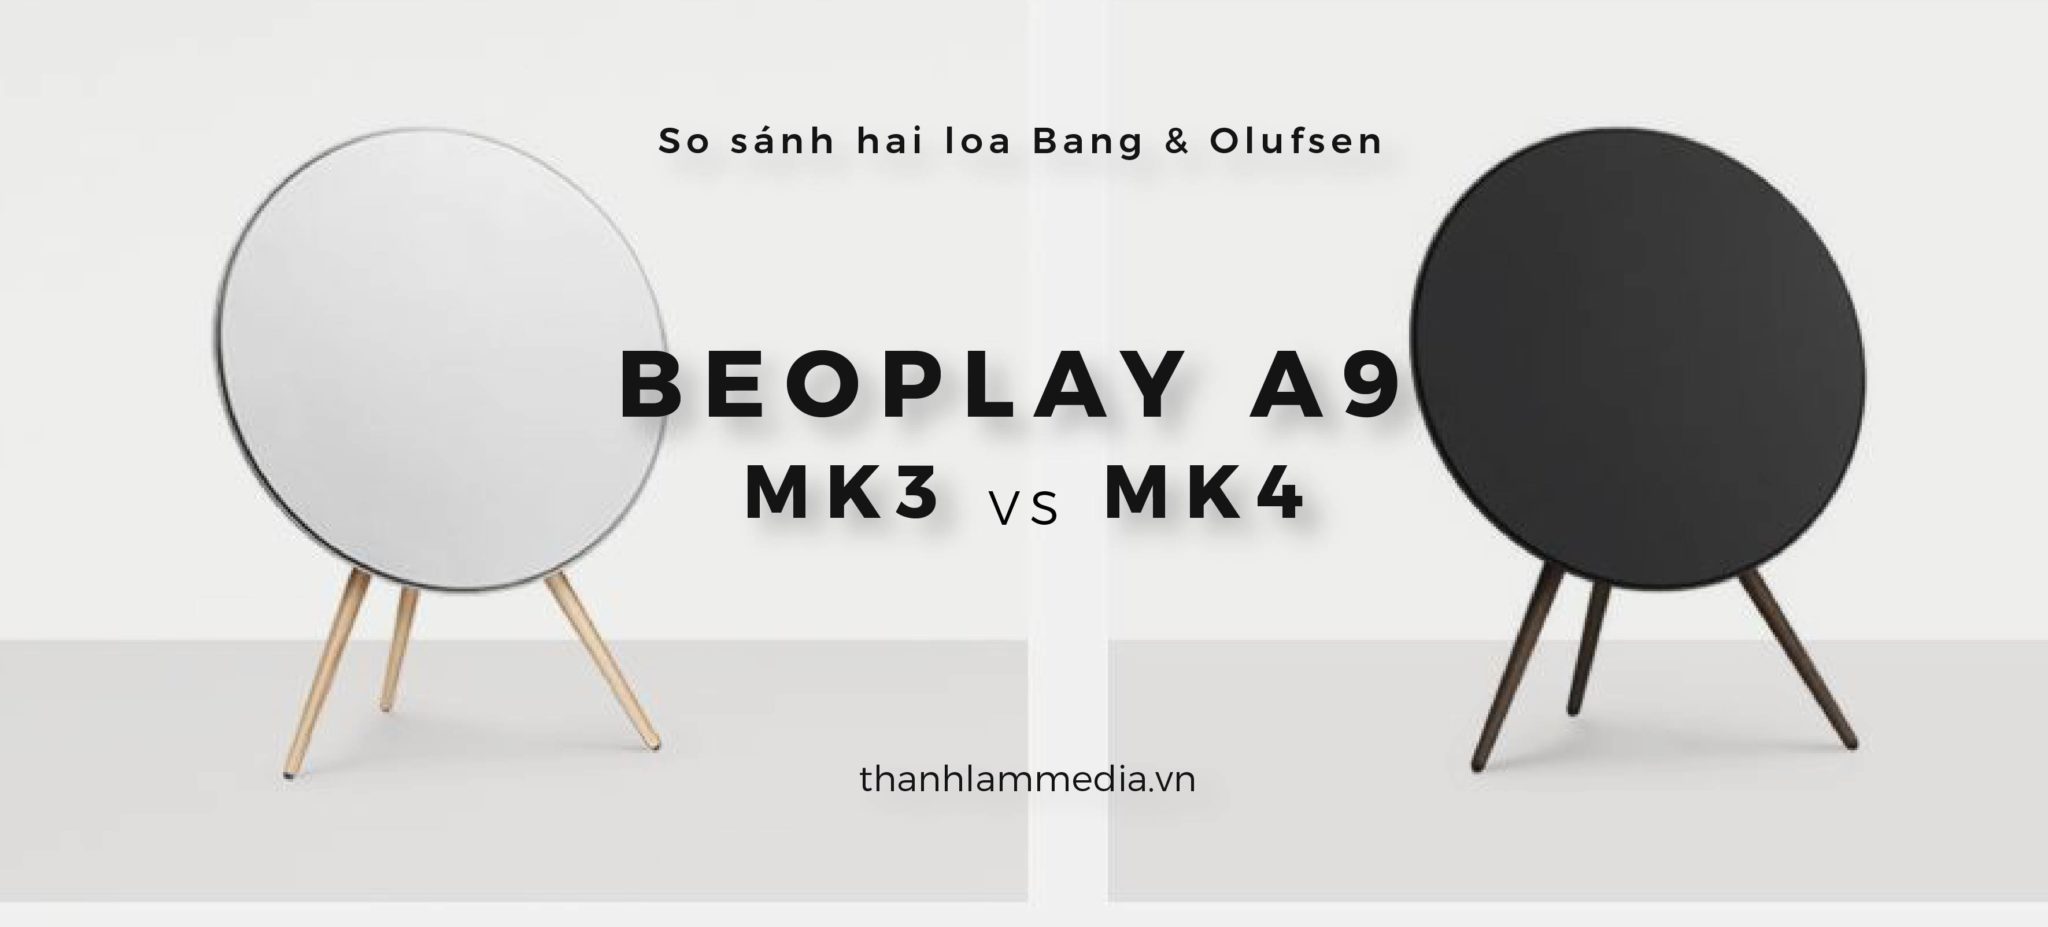 So sánh hai loa Beoplay A9 Mk3 và Beoplay A9 Mk4 2